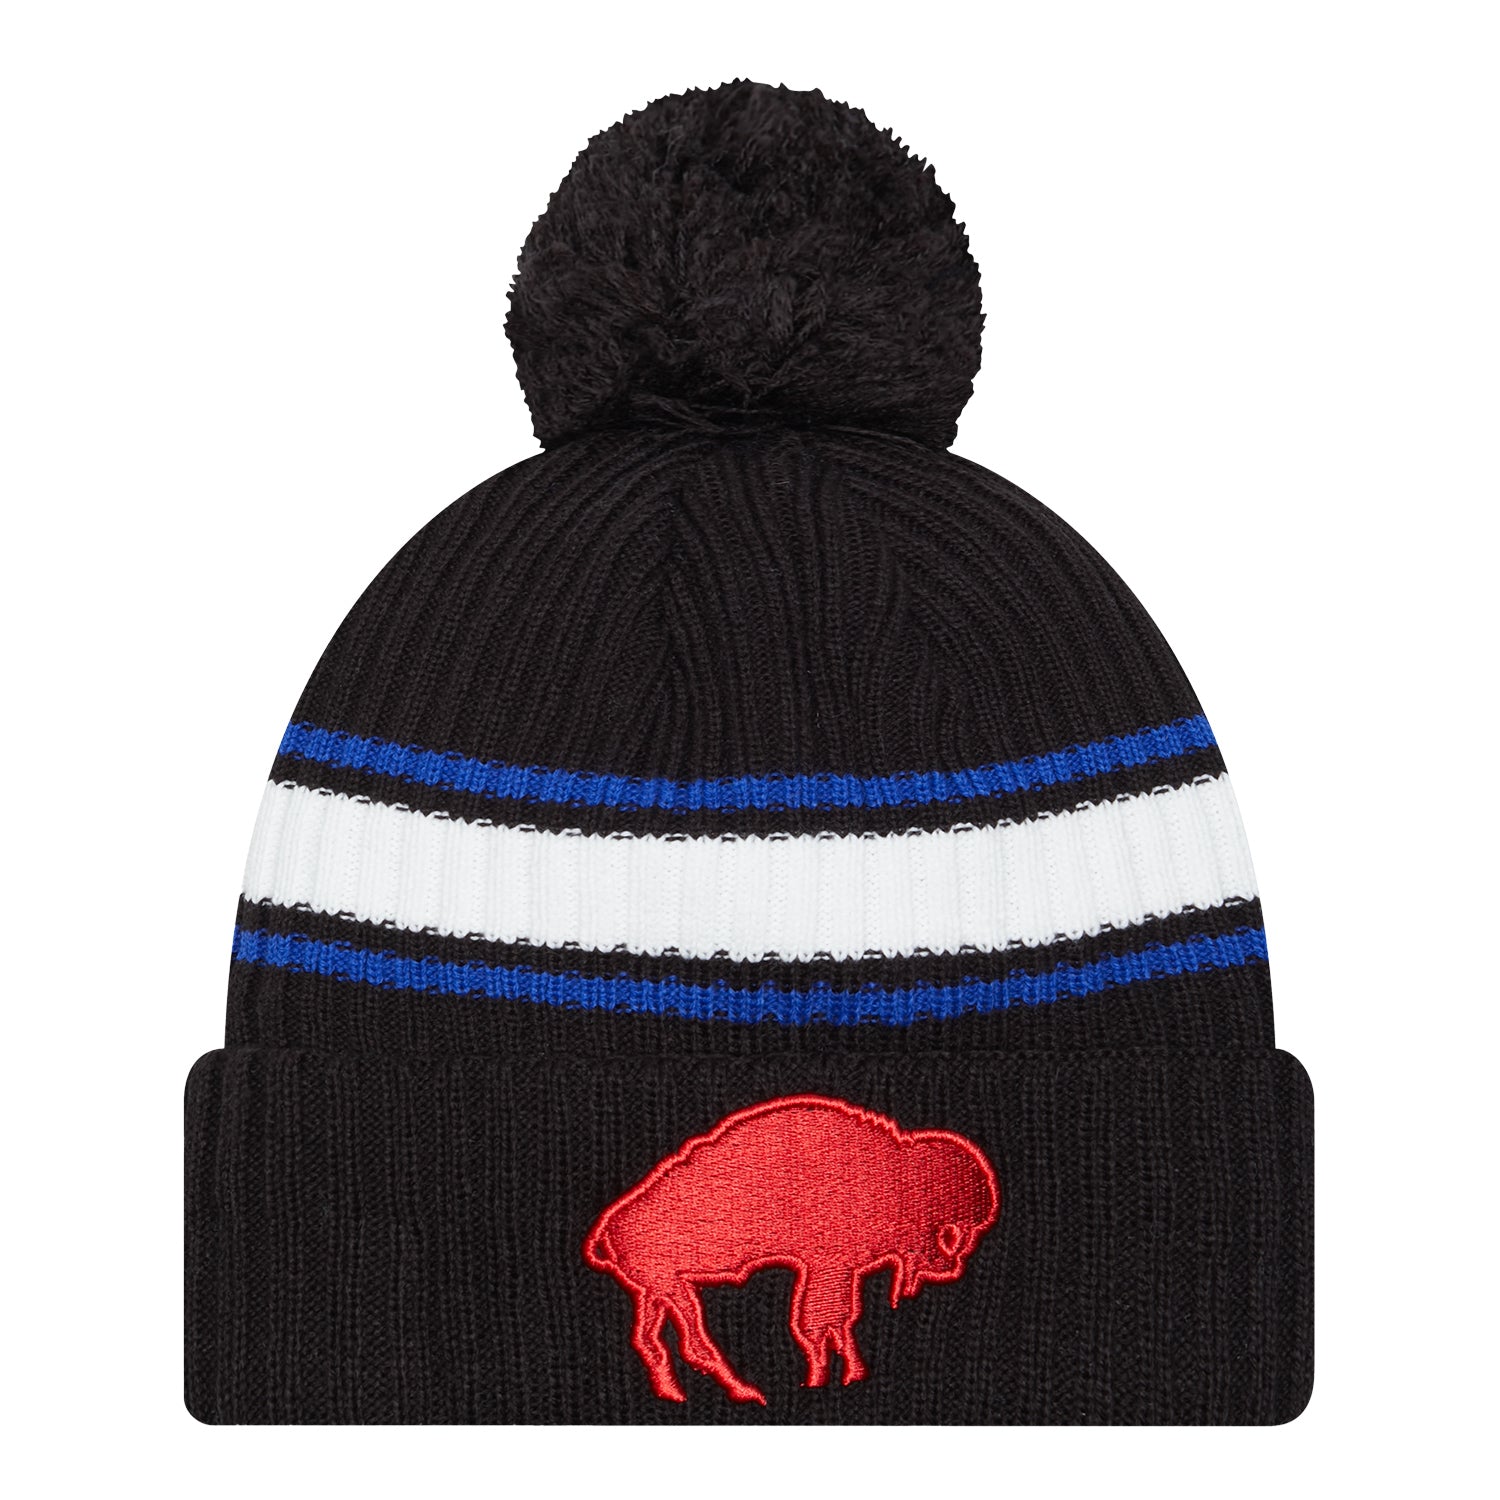 buffalo bills black knit hat